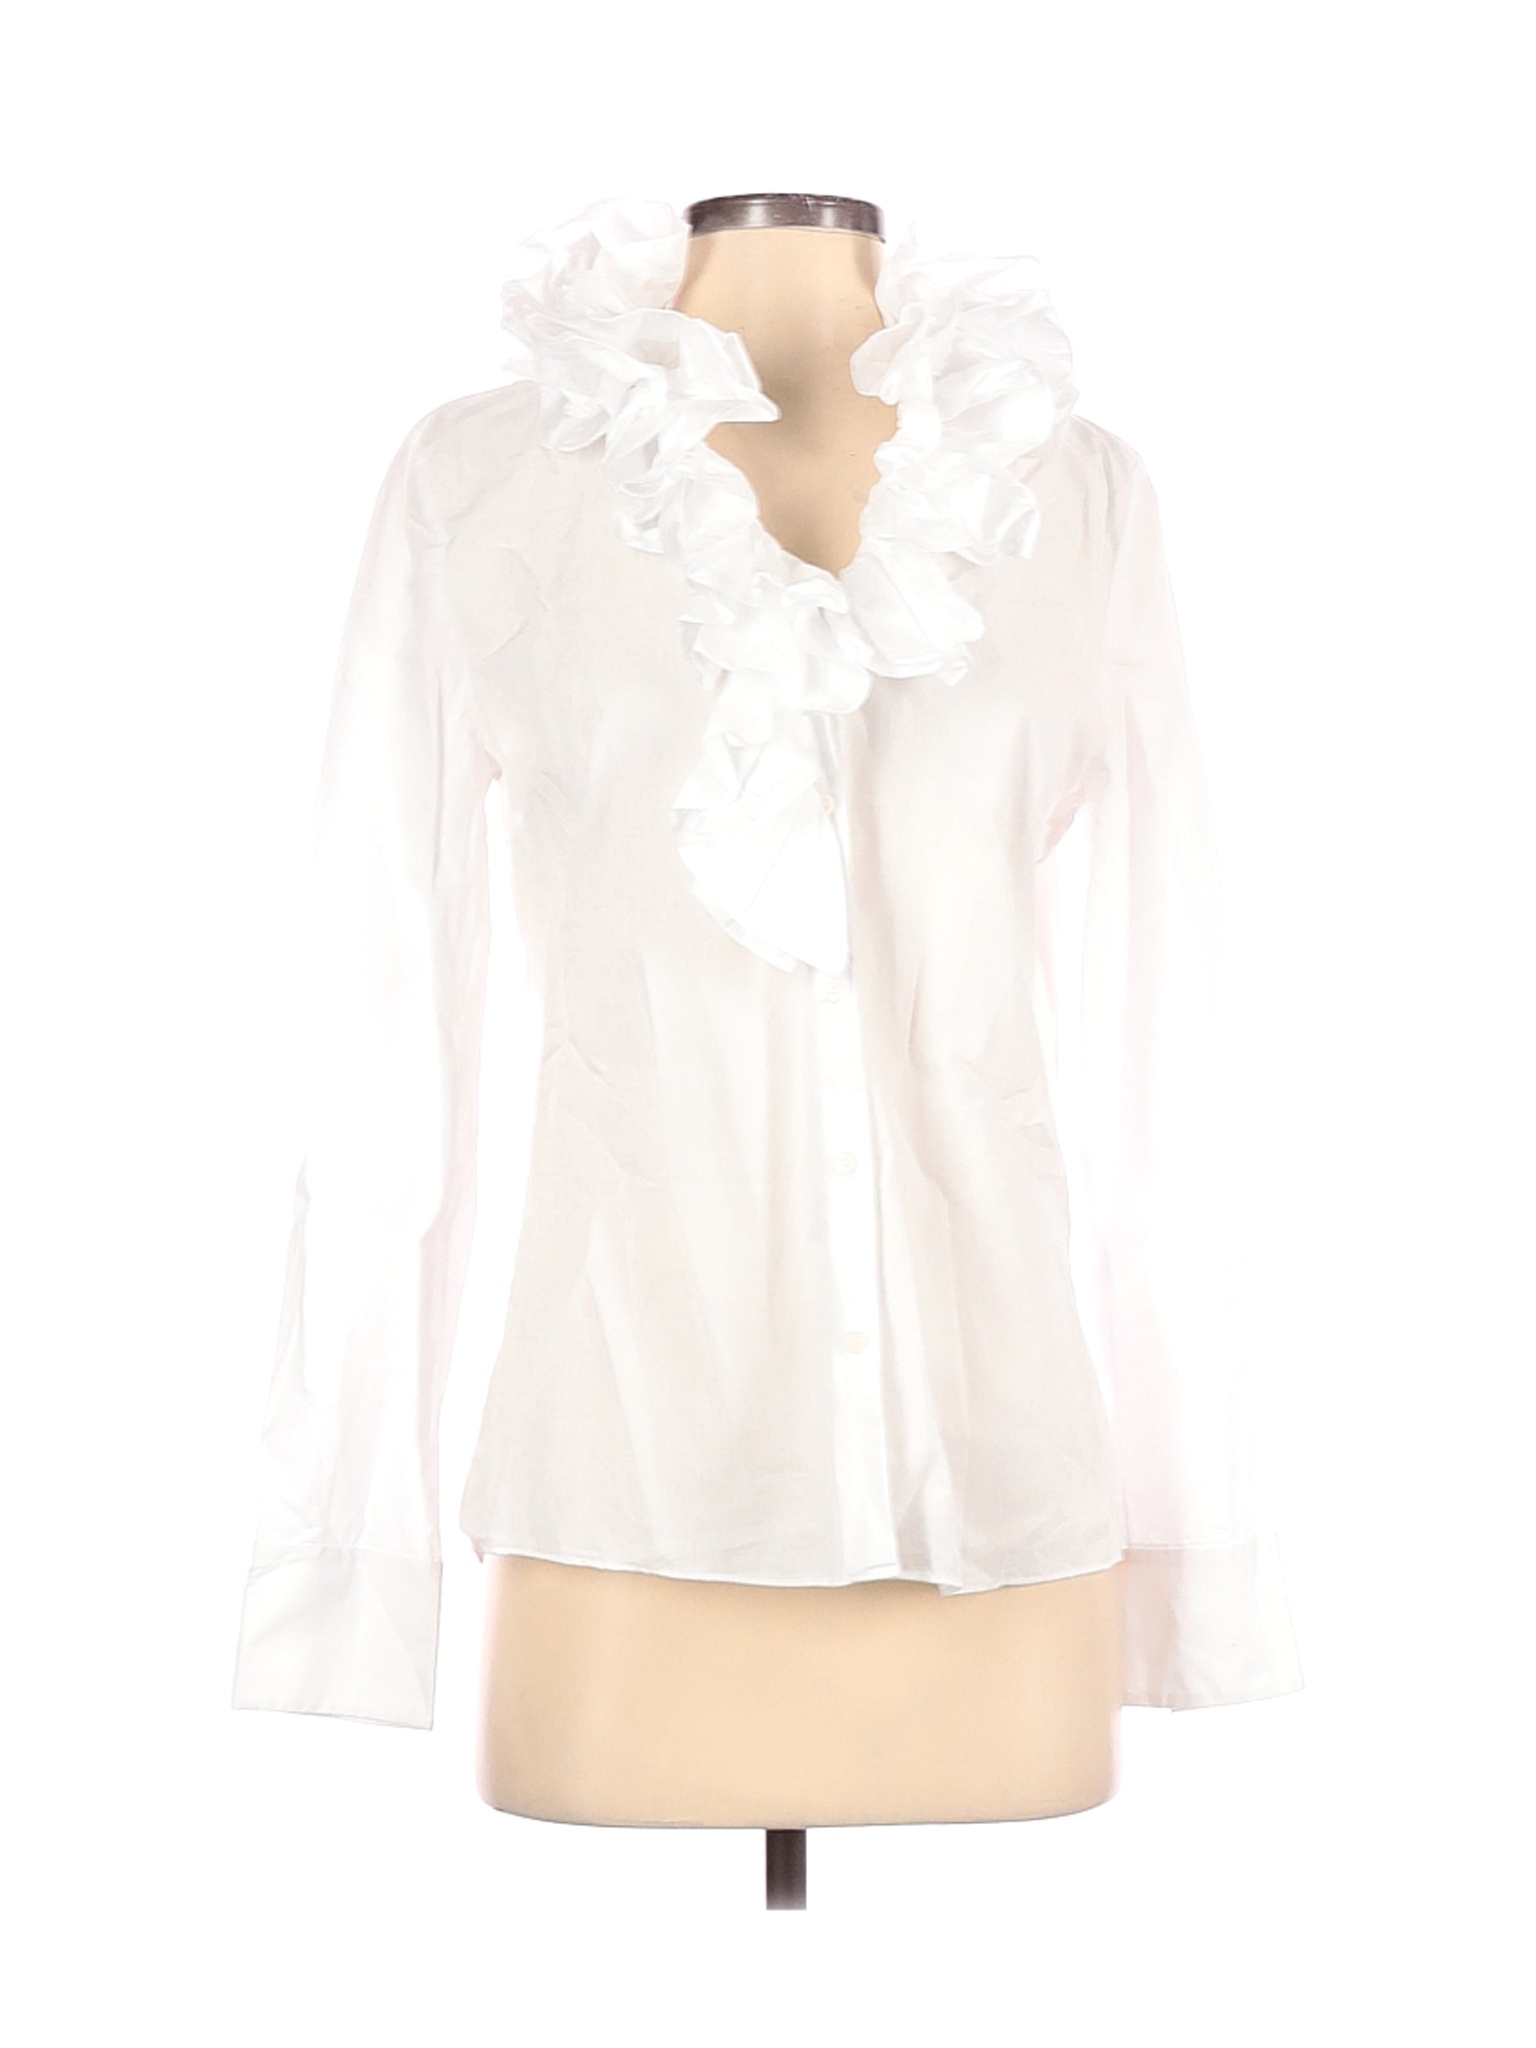 Zara Women White Long Sleeve Button-Down Shirt S | eBay